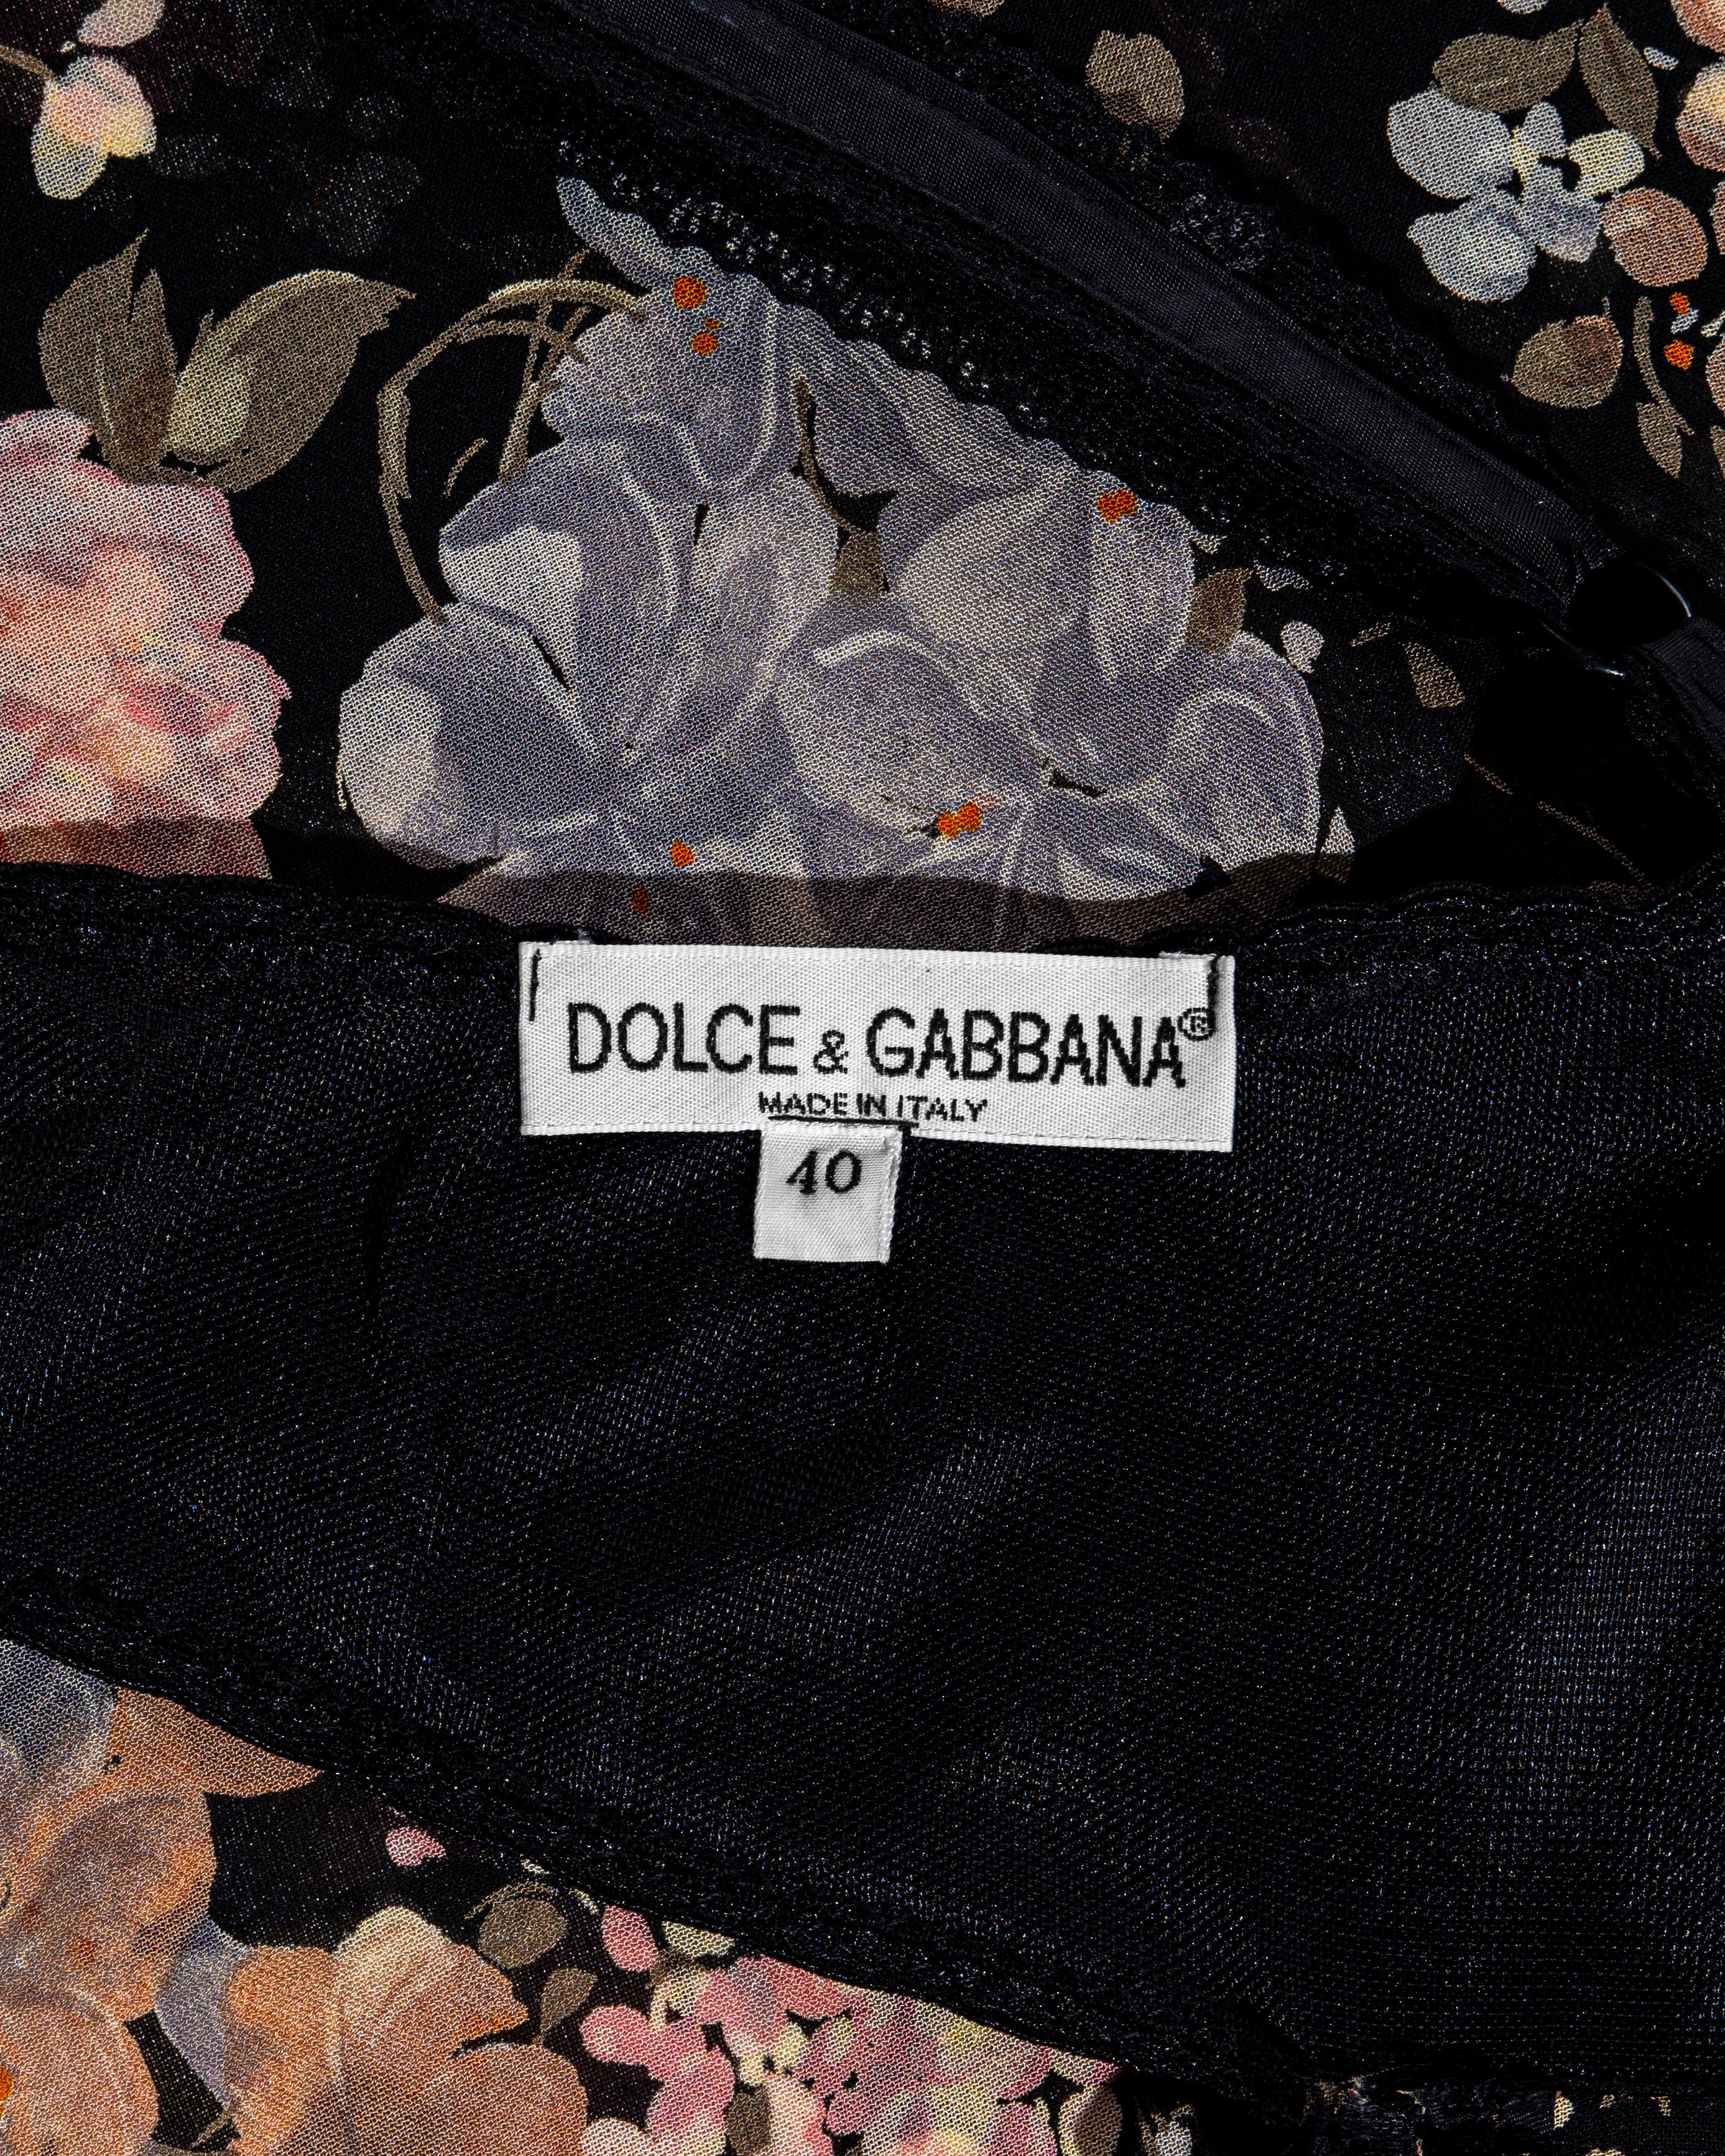 Dolce & Gabbana floral chiffon and lace evening slip dress, ss 1997 4